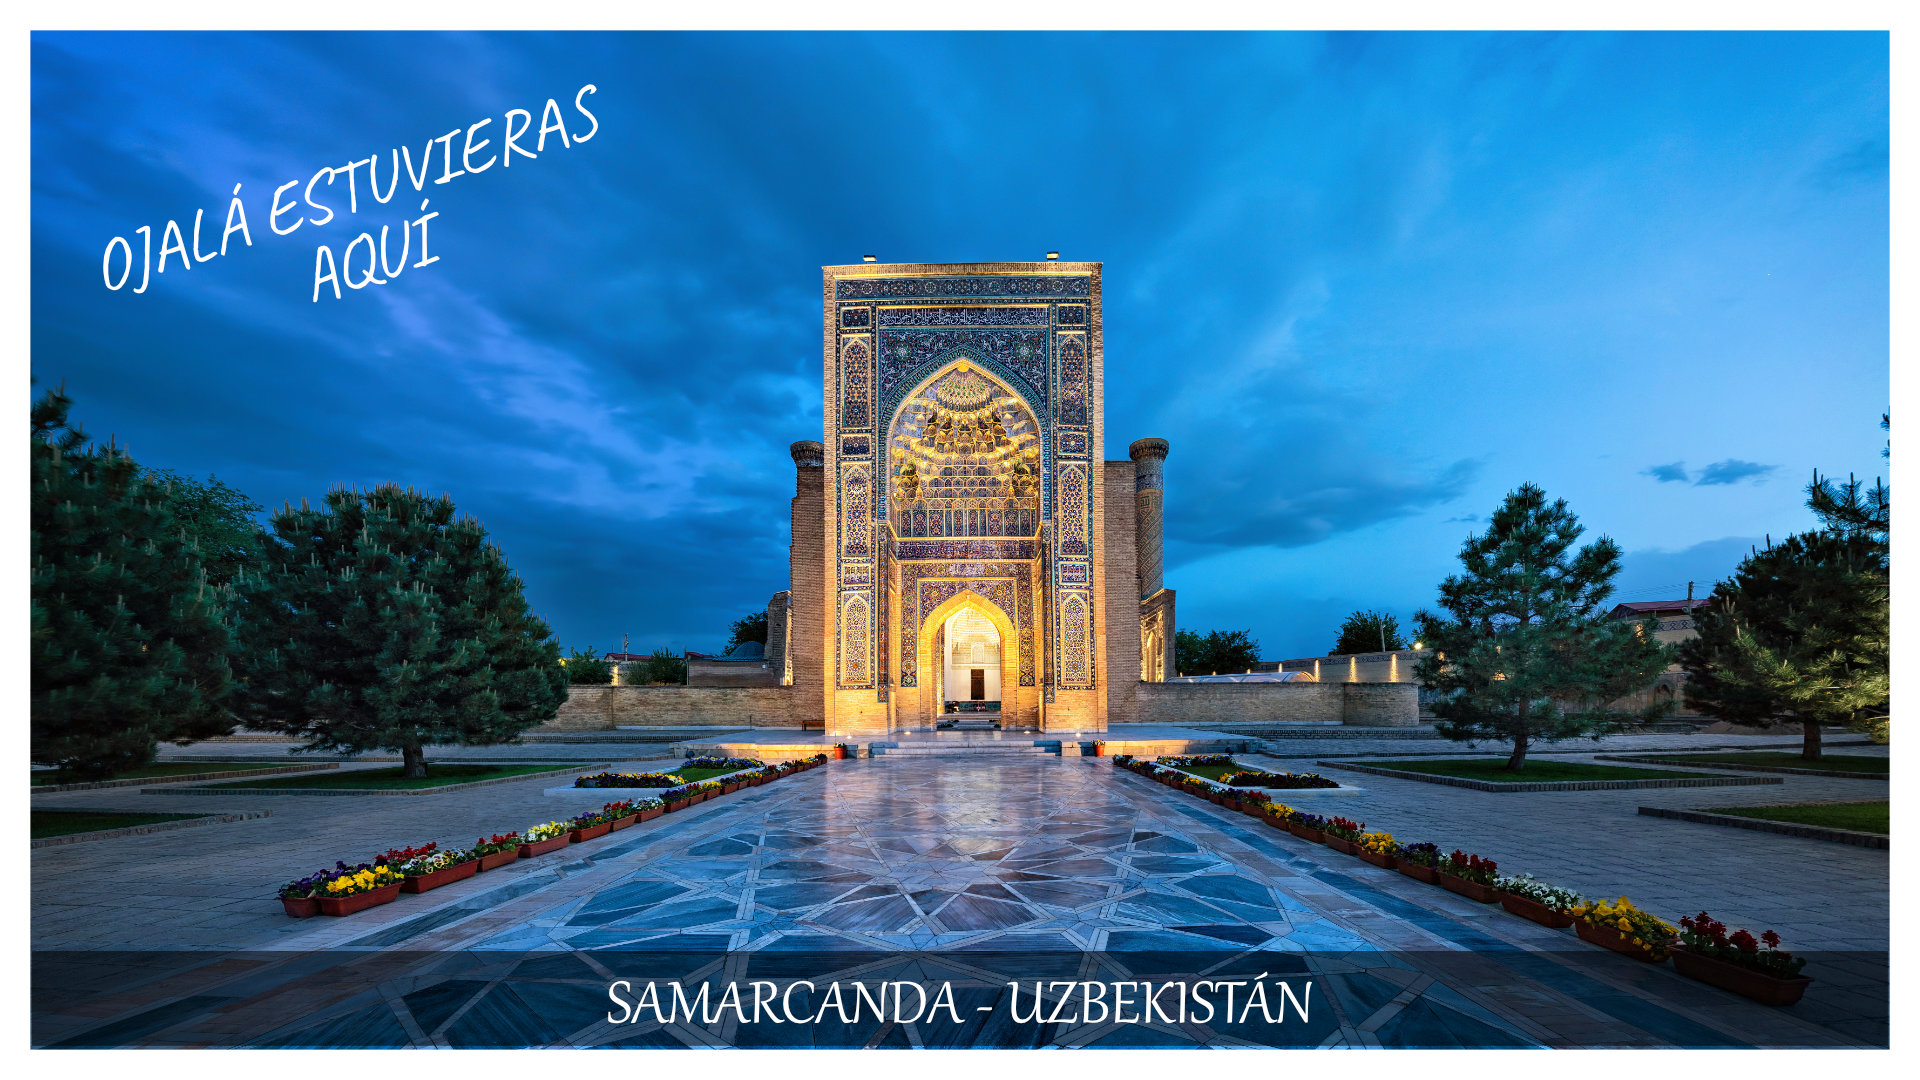 viajes-plaza-registan-al-anochecer-samarcanda-uzbekistan